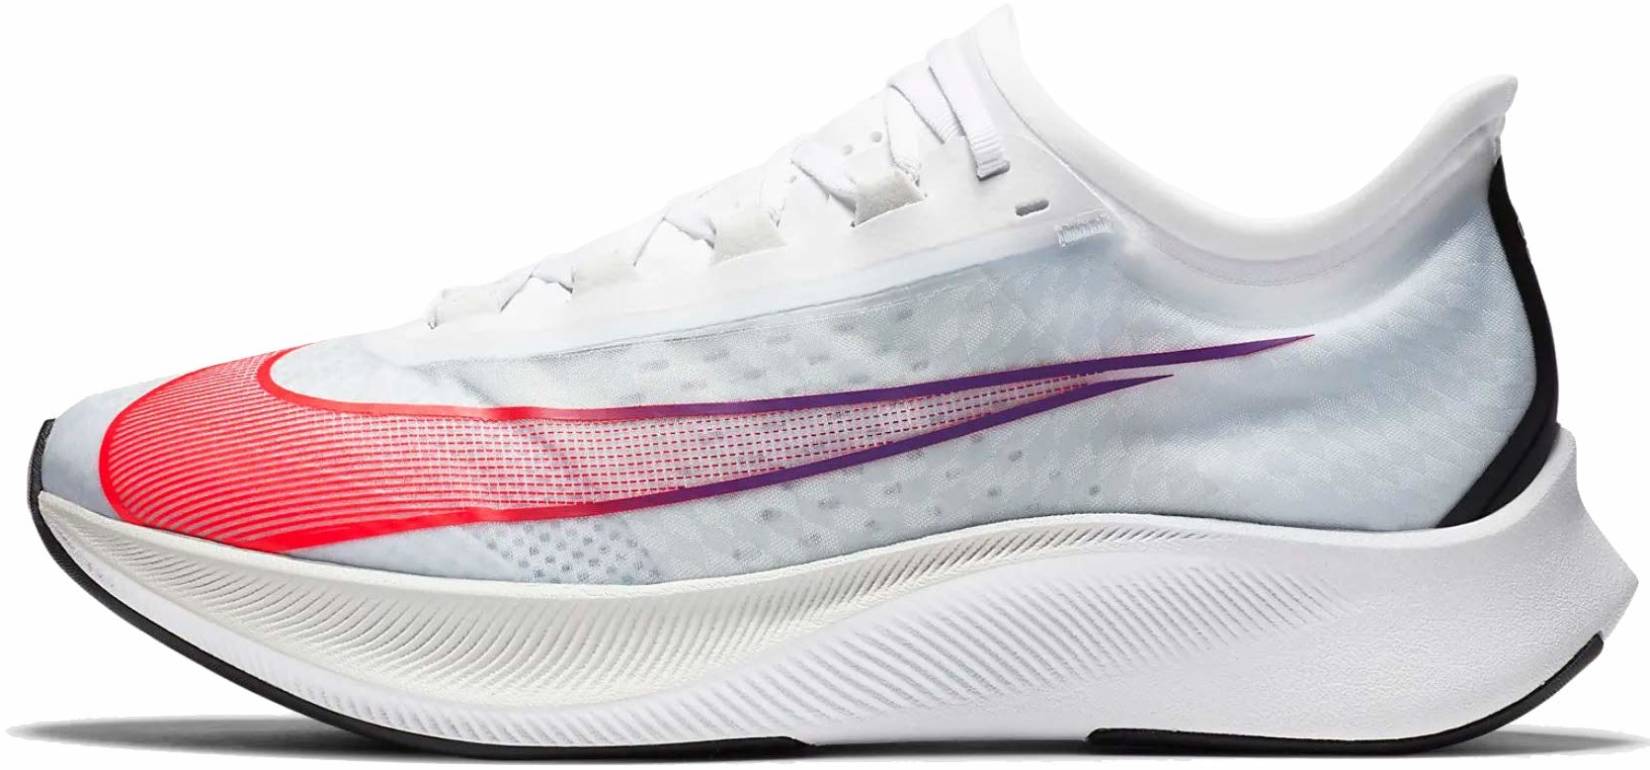 Nike Zoom Fly 3 Review: 5 pros, 2 cons (2022) | RunRepeat ديكور الكيك بجدة